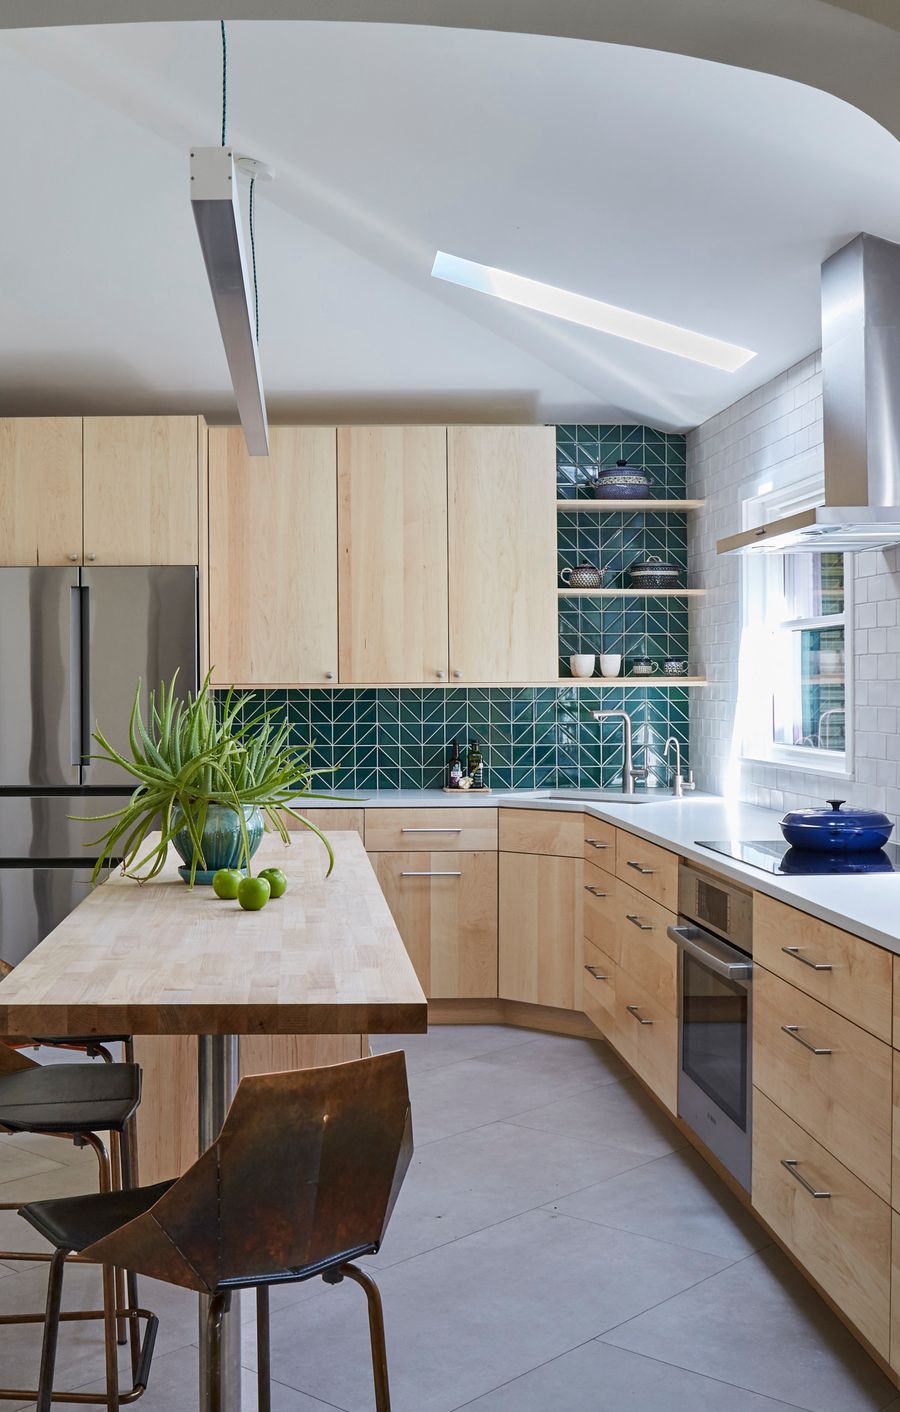 Teal mid-century modern kitchen tiles ideas DDK Kitchen Design Group